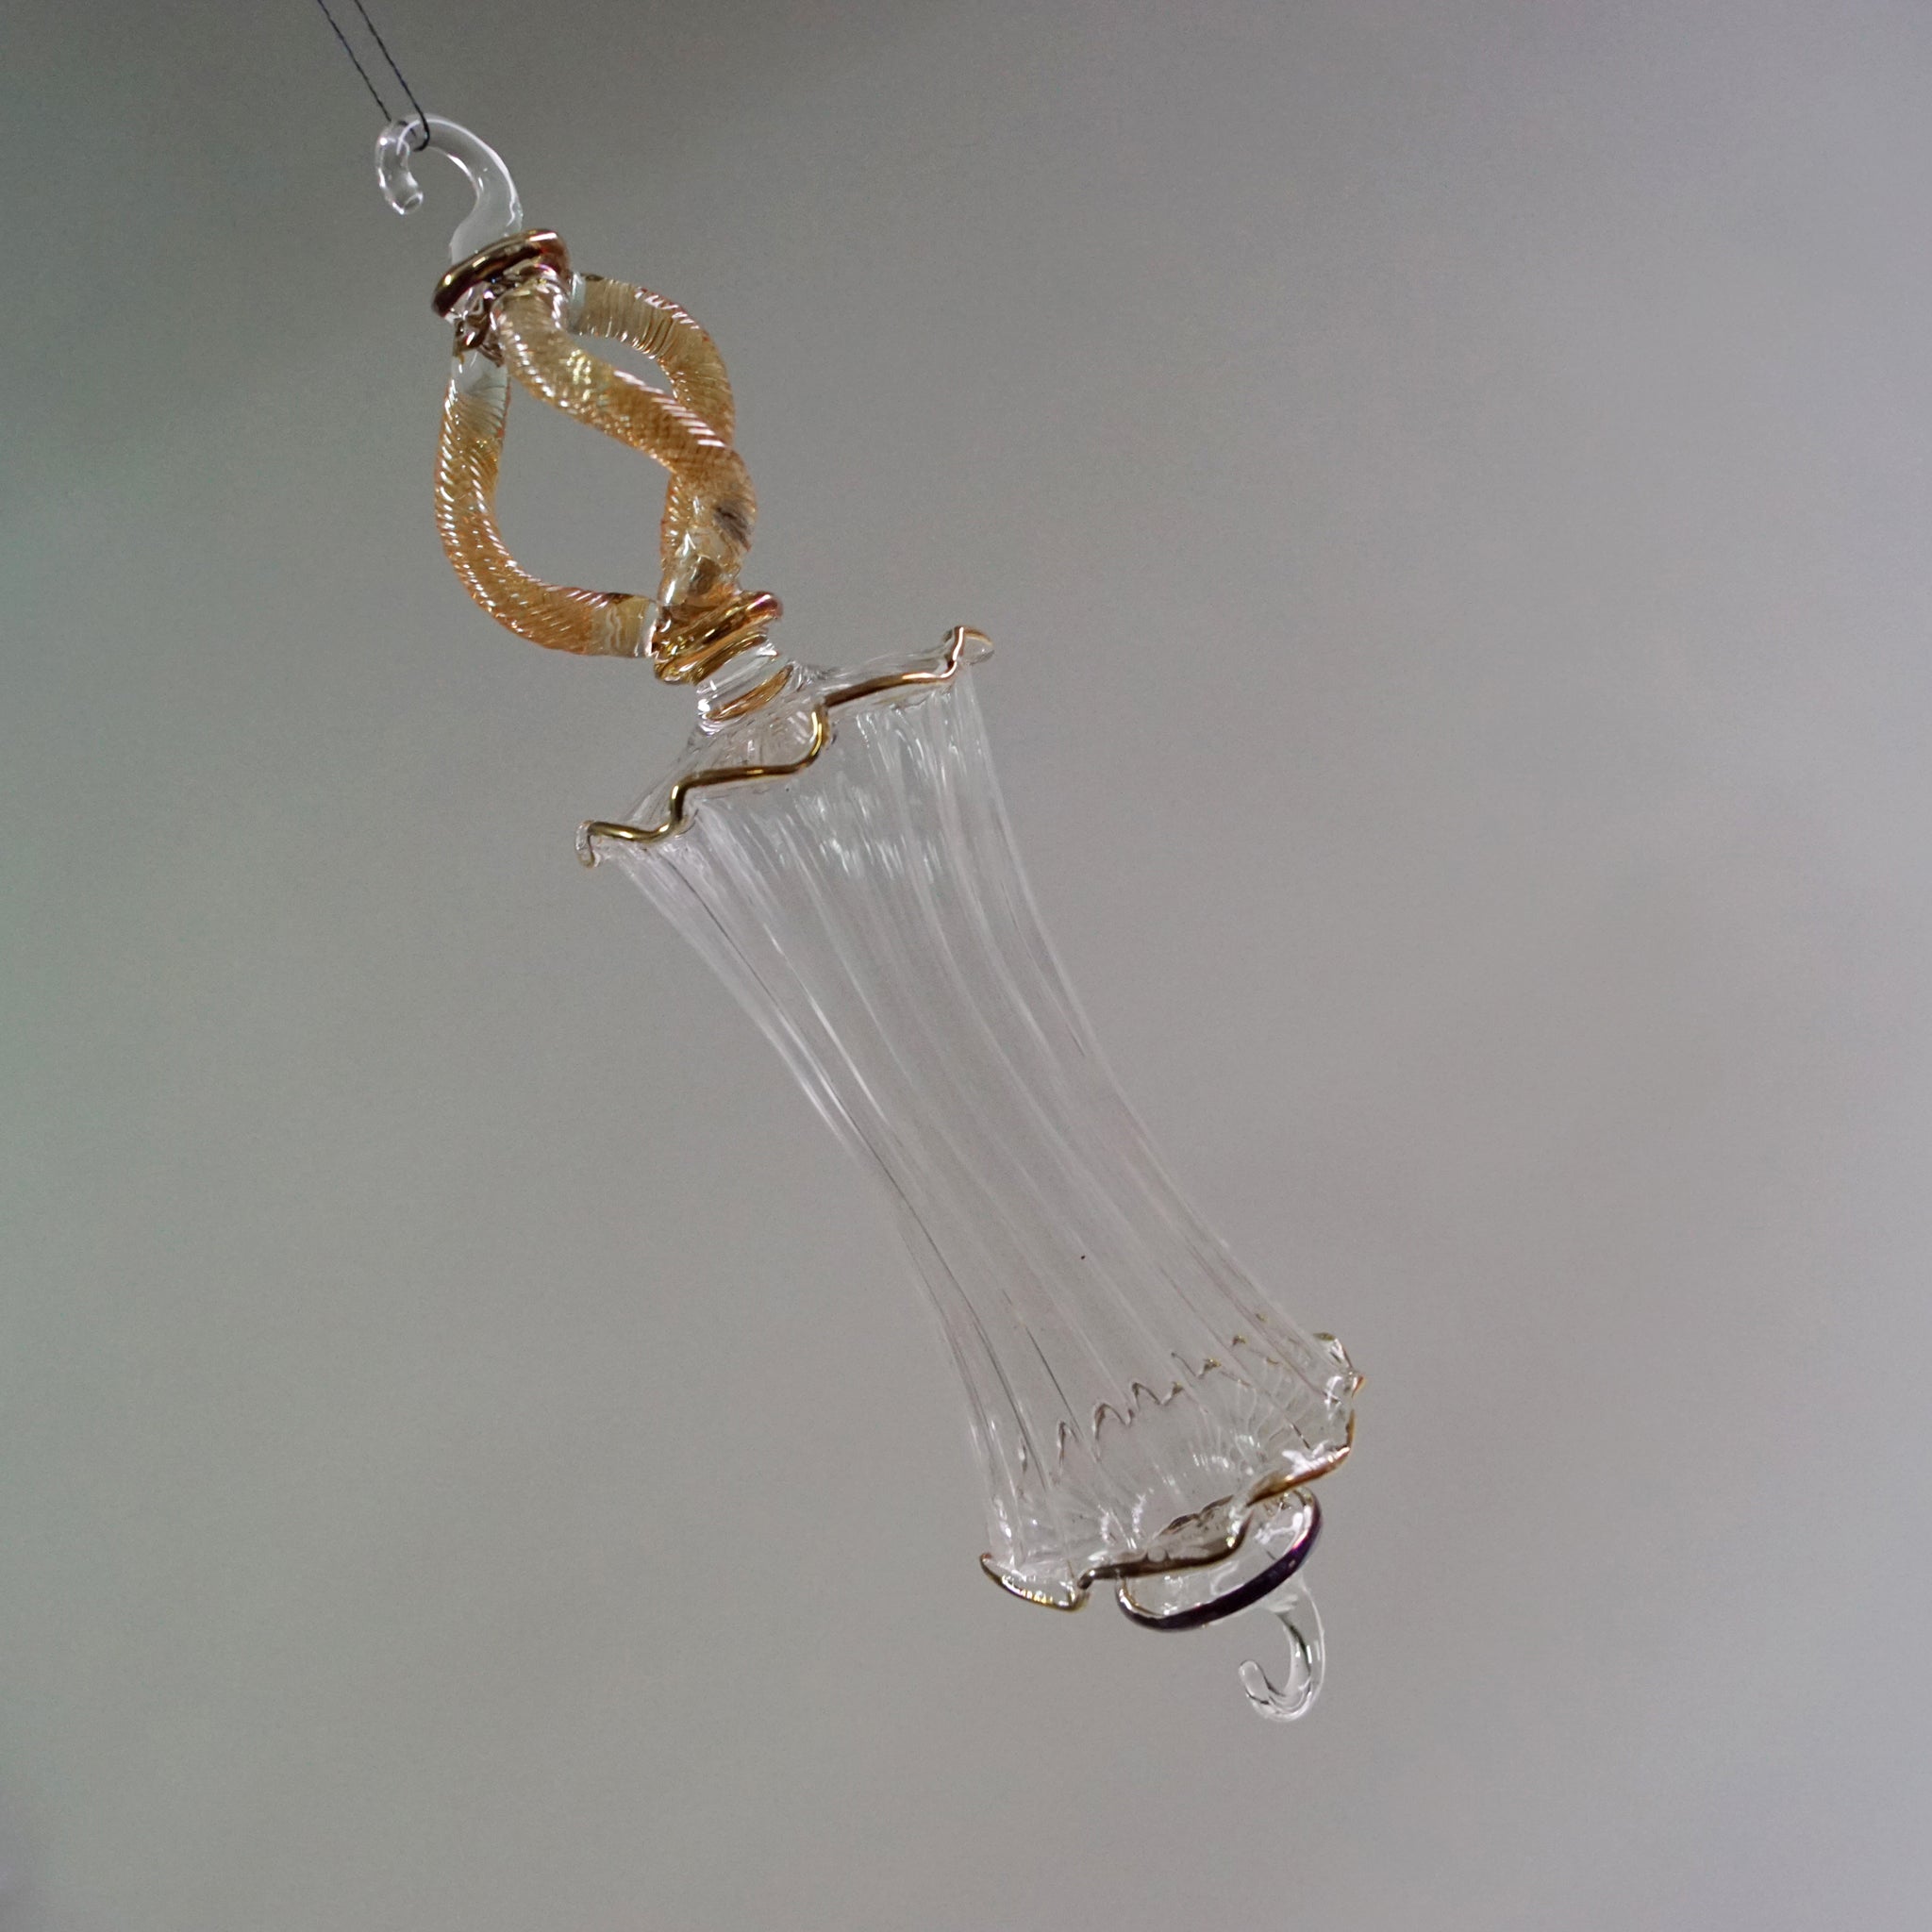 Goodwill-Kersthanger goud luster glas 20 cm per 2 - Schreuder-kraan.shop